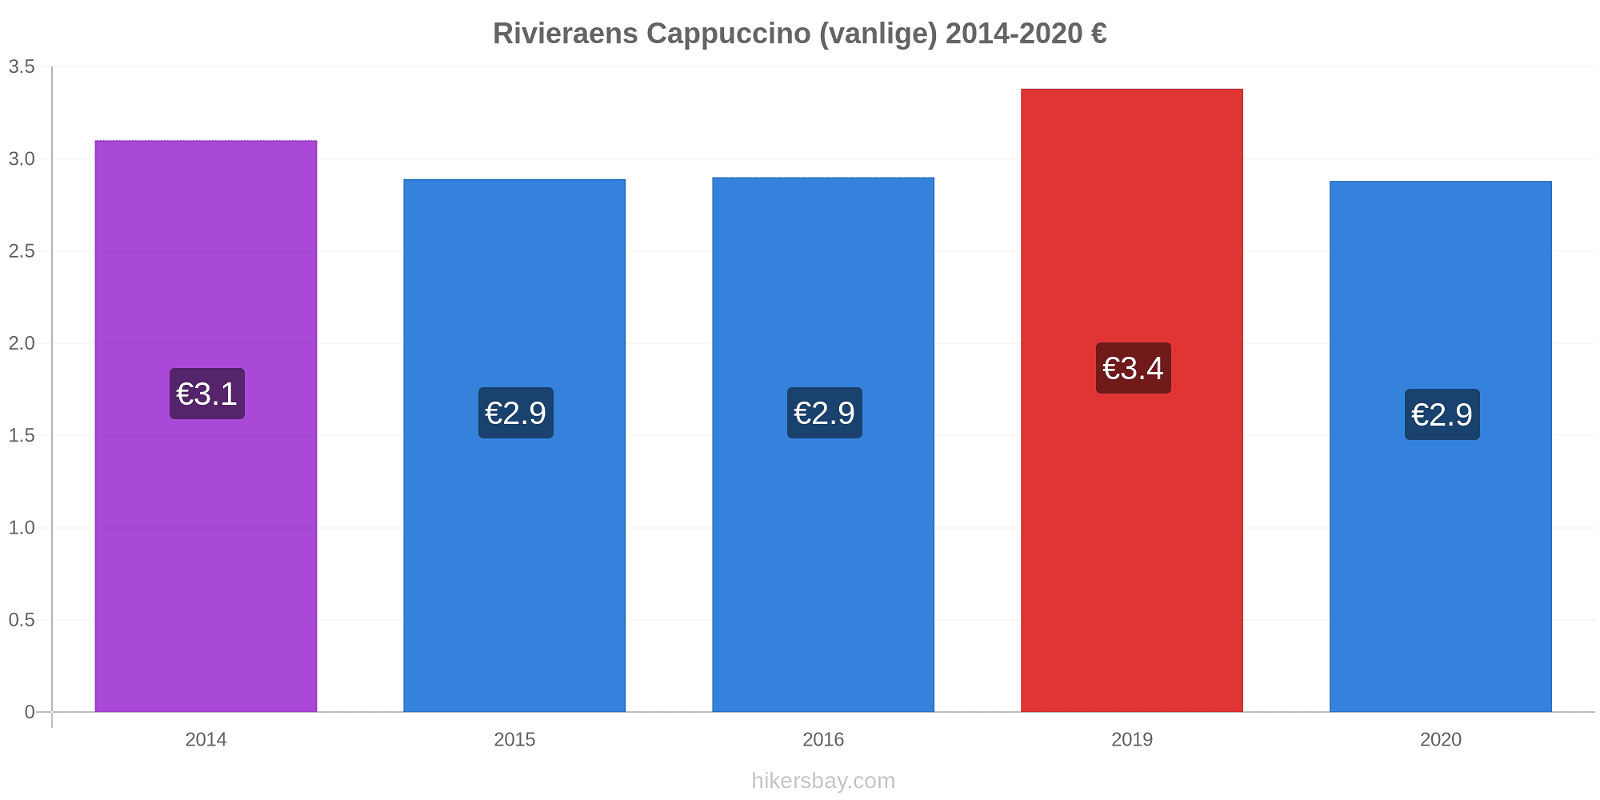 Rivieraens prisendringer Cappuccino (vanlige) hikersbay.com